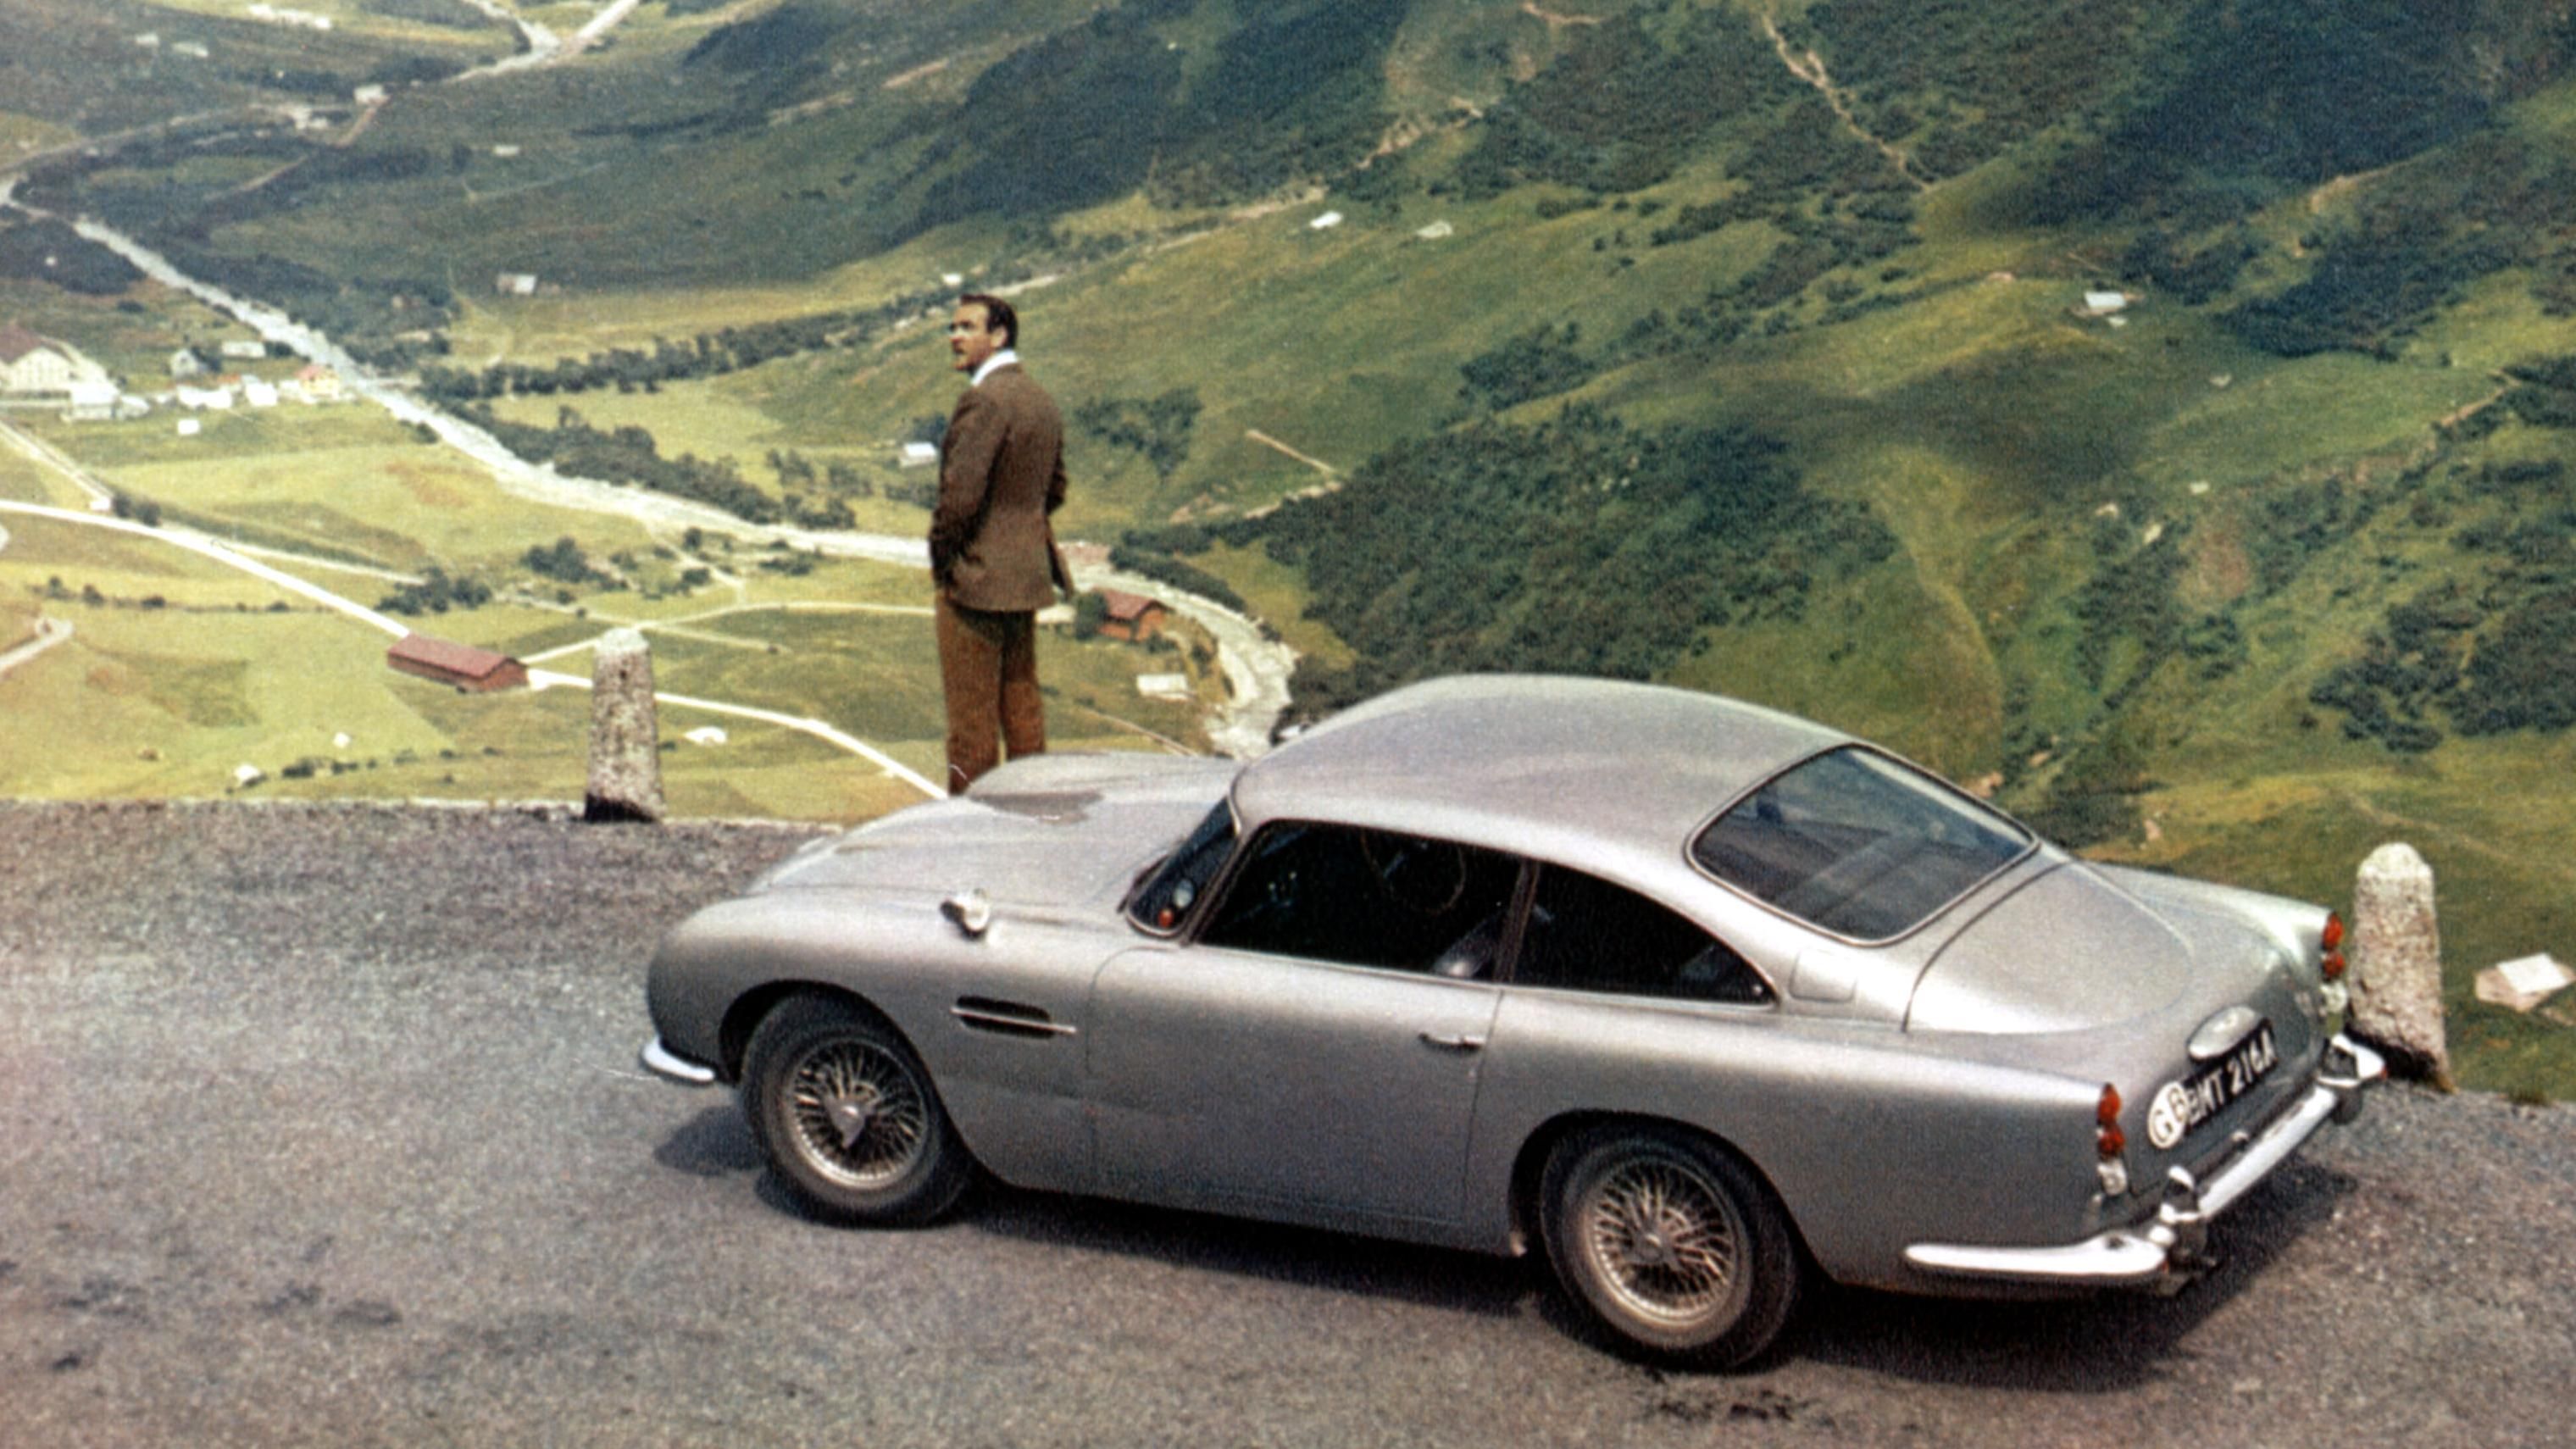 Sean Connery stops his Aston Martin in the mountains